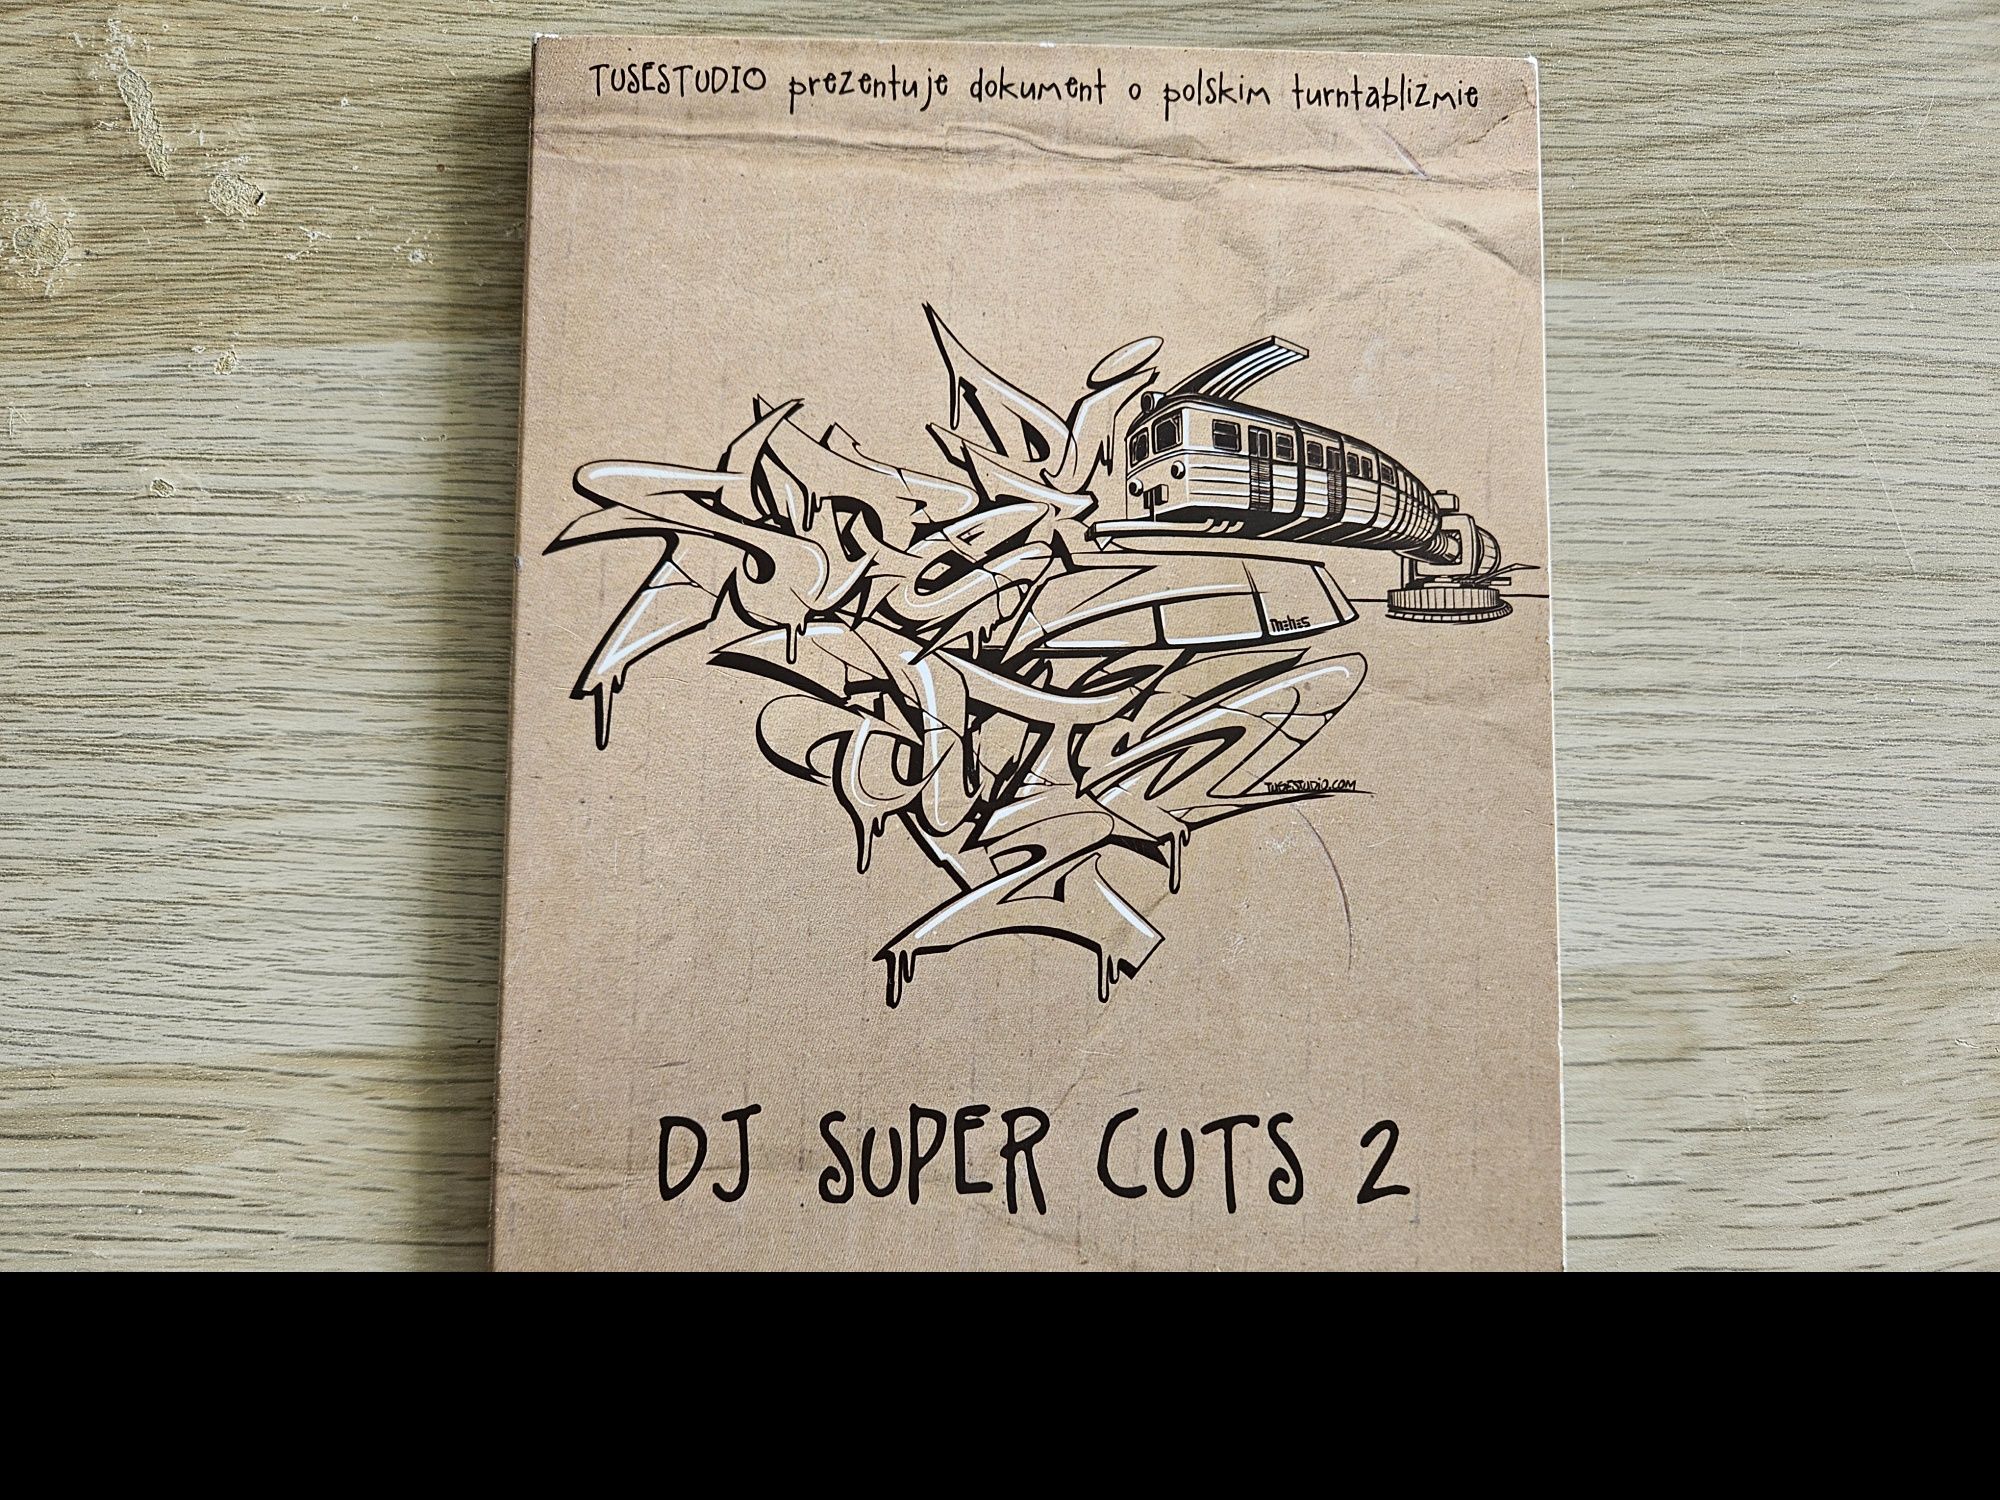 DJ Super Cuts 2 - dokument o polskim turntablizmie